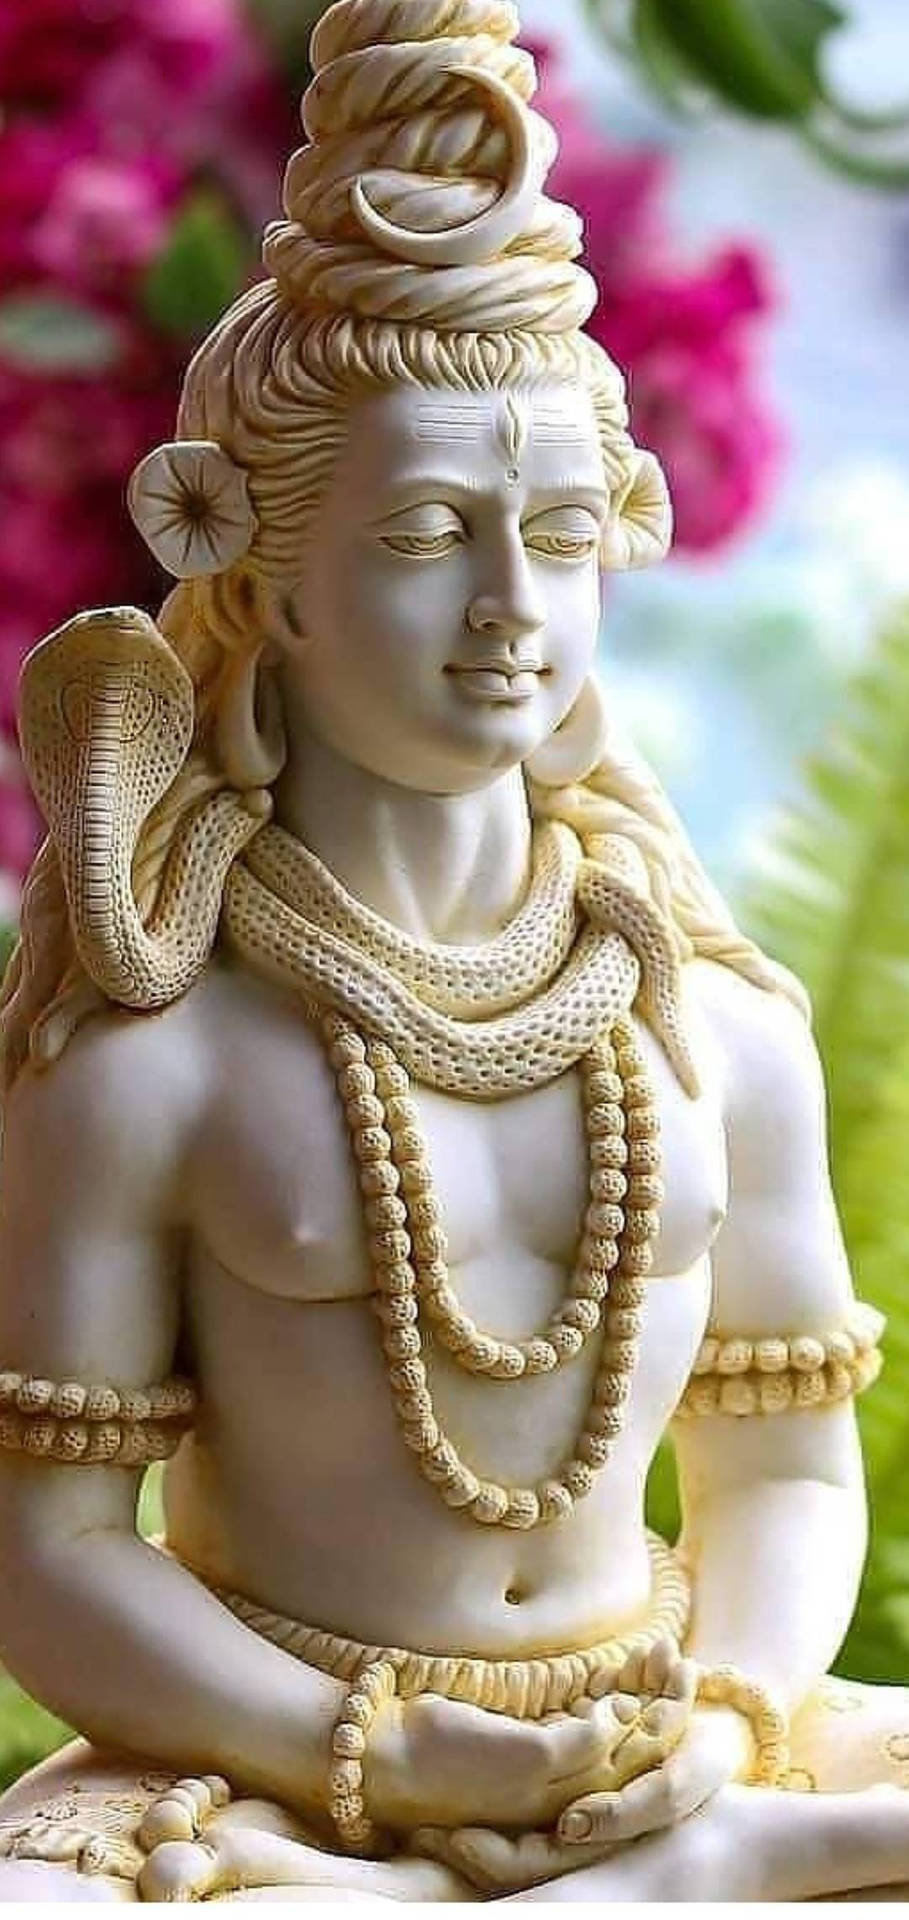 Lord Shiva Stone Figure Background